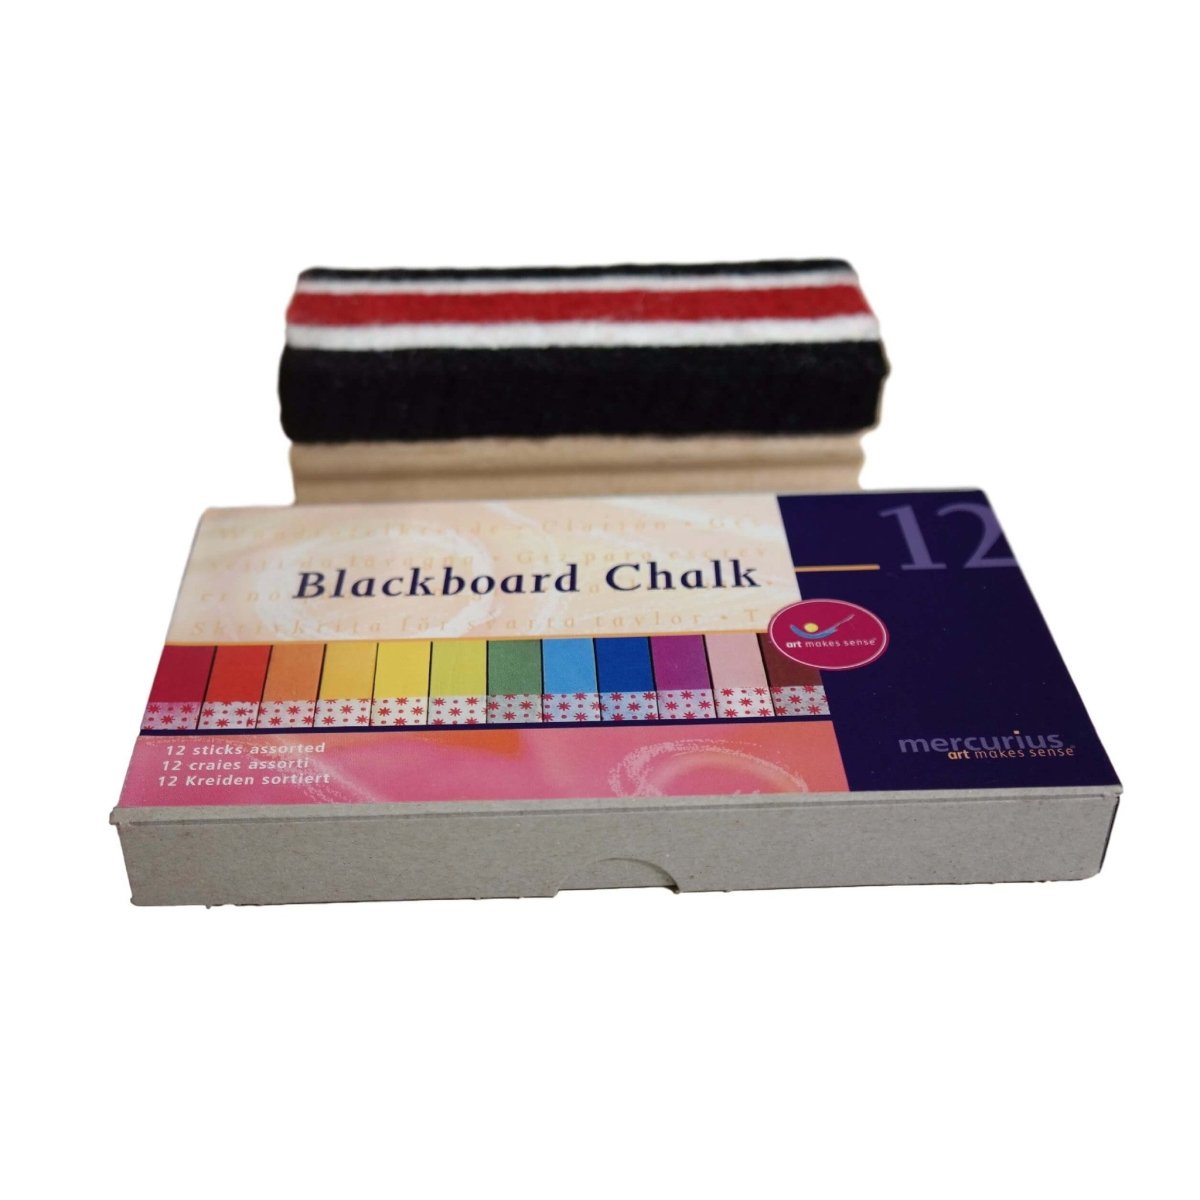 Blackboard Chalk - 12 pcs Assorted Colors and Chalkboard Eraser - Challenge & Fun, Inc.-MC207151S-1